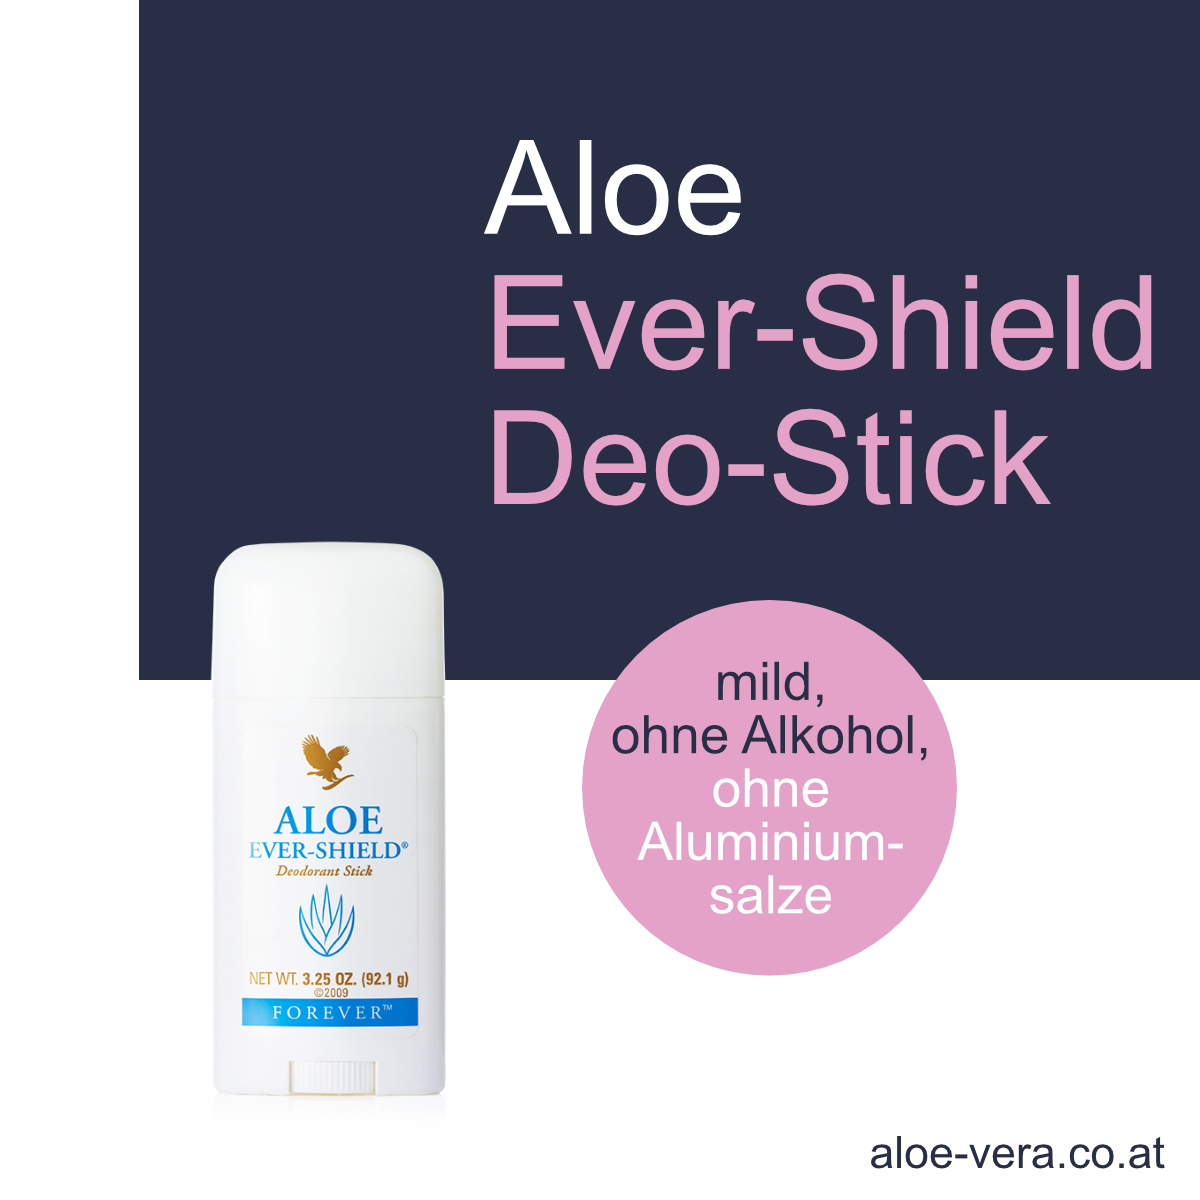 Forever Aloe Ever Shield, Deo Stick ohne Alkohol, ohne Aluminiumsalze kaufen